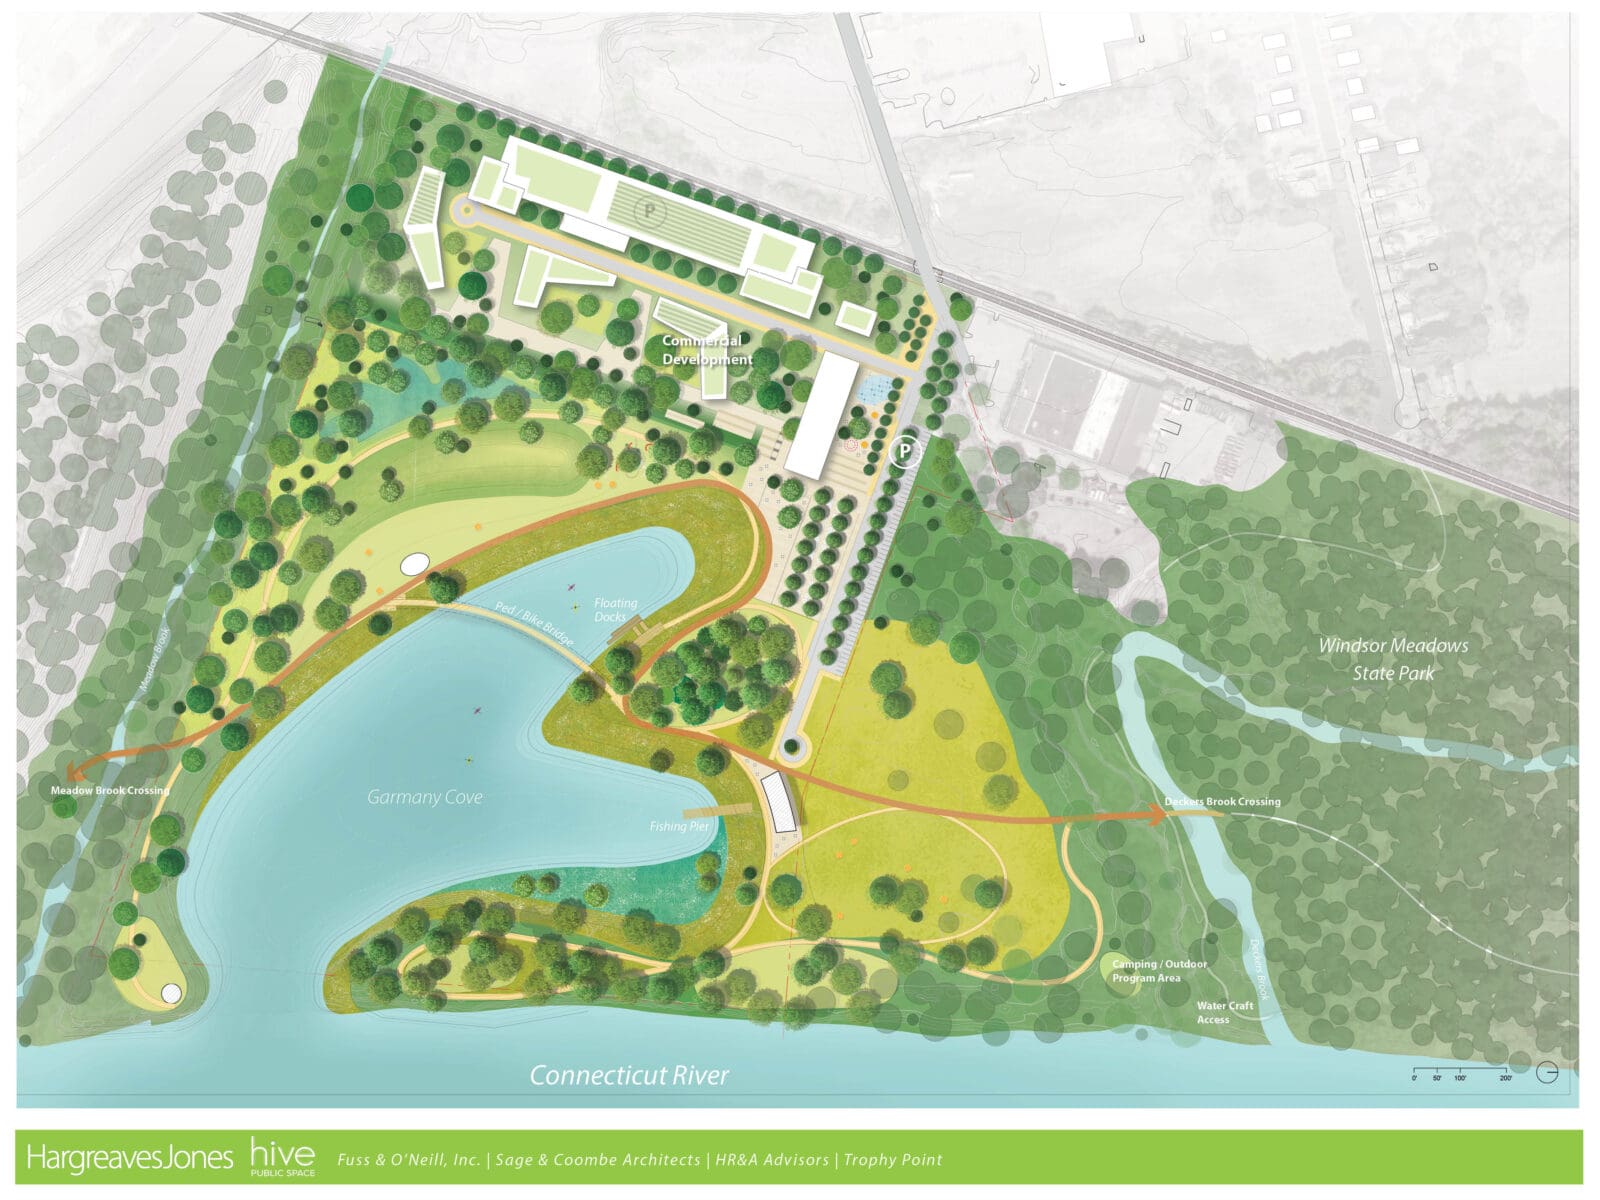 Image 8b The Emerging Park Vision Plan